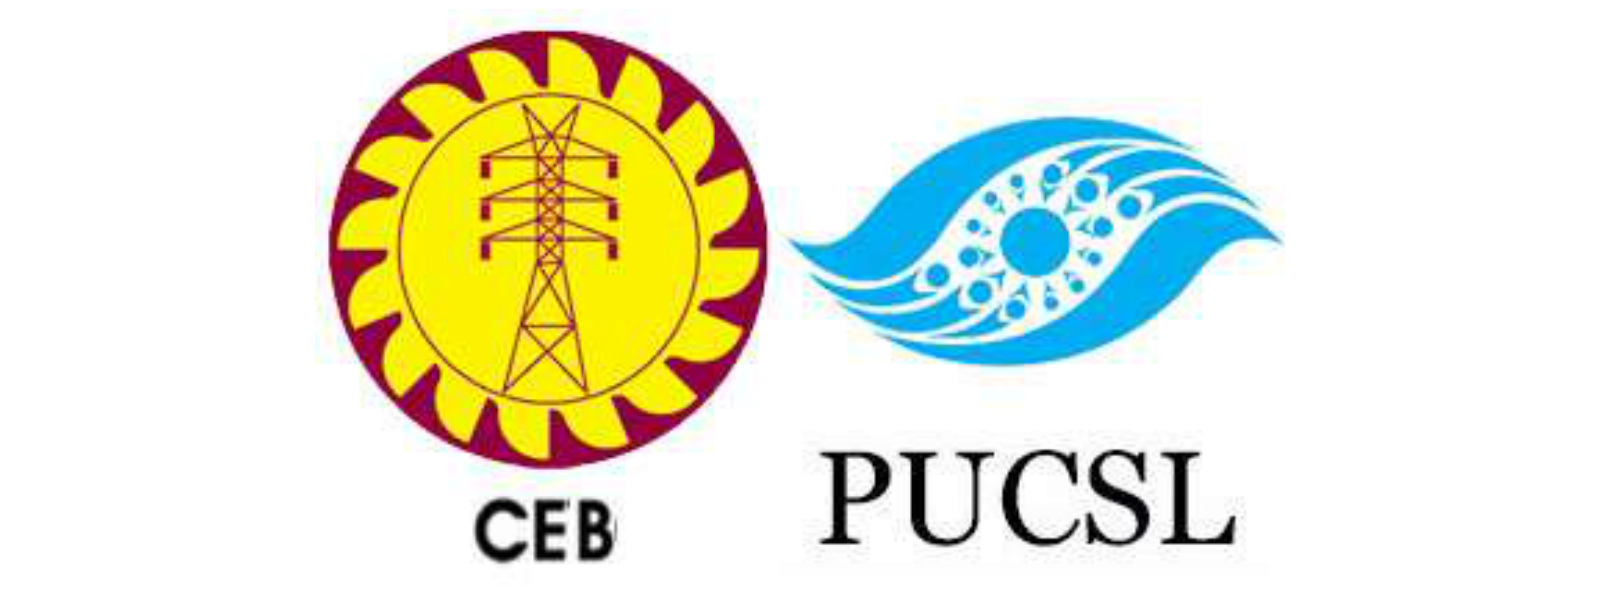 CEB chief's dismissal of PUCSL draws severe flak